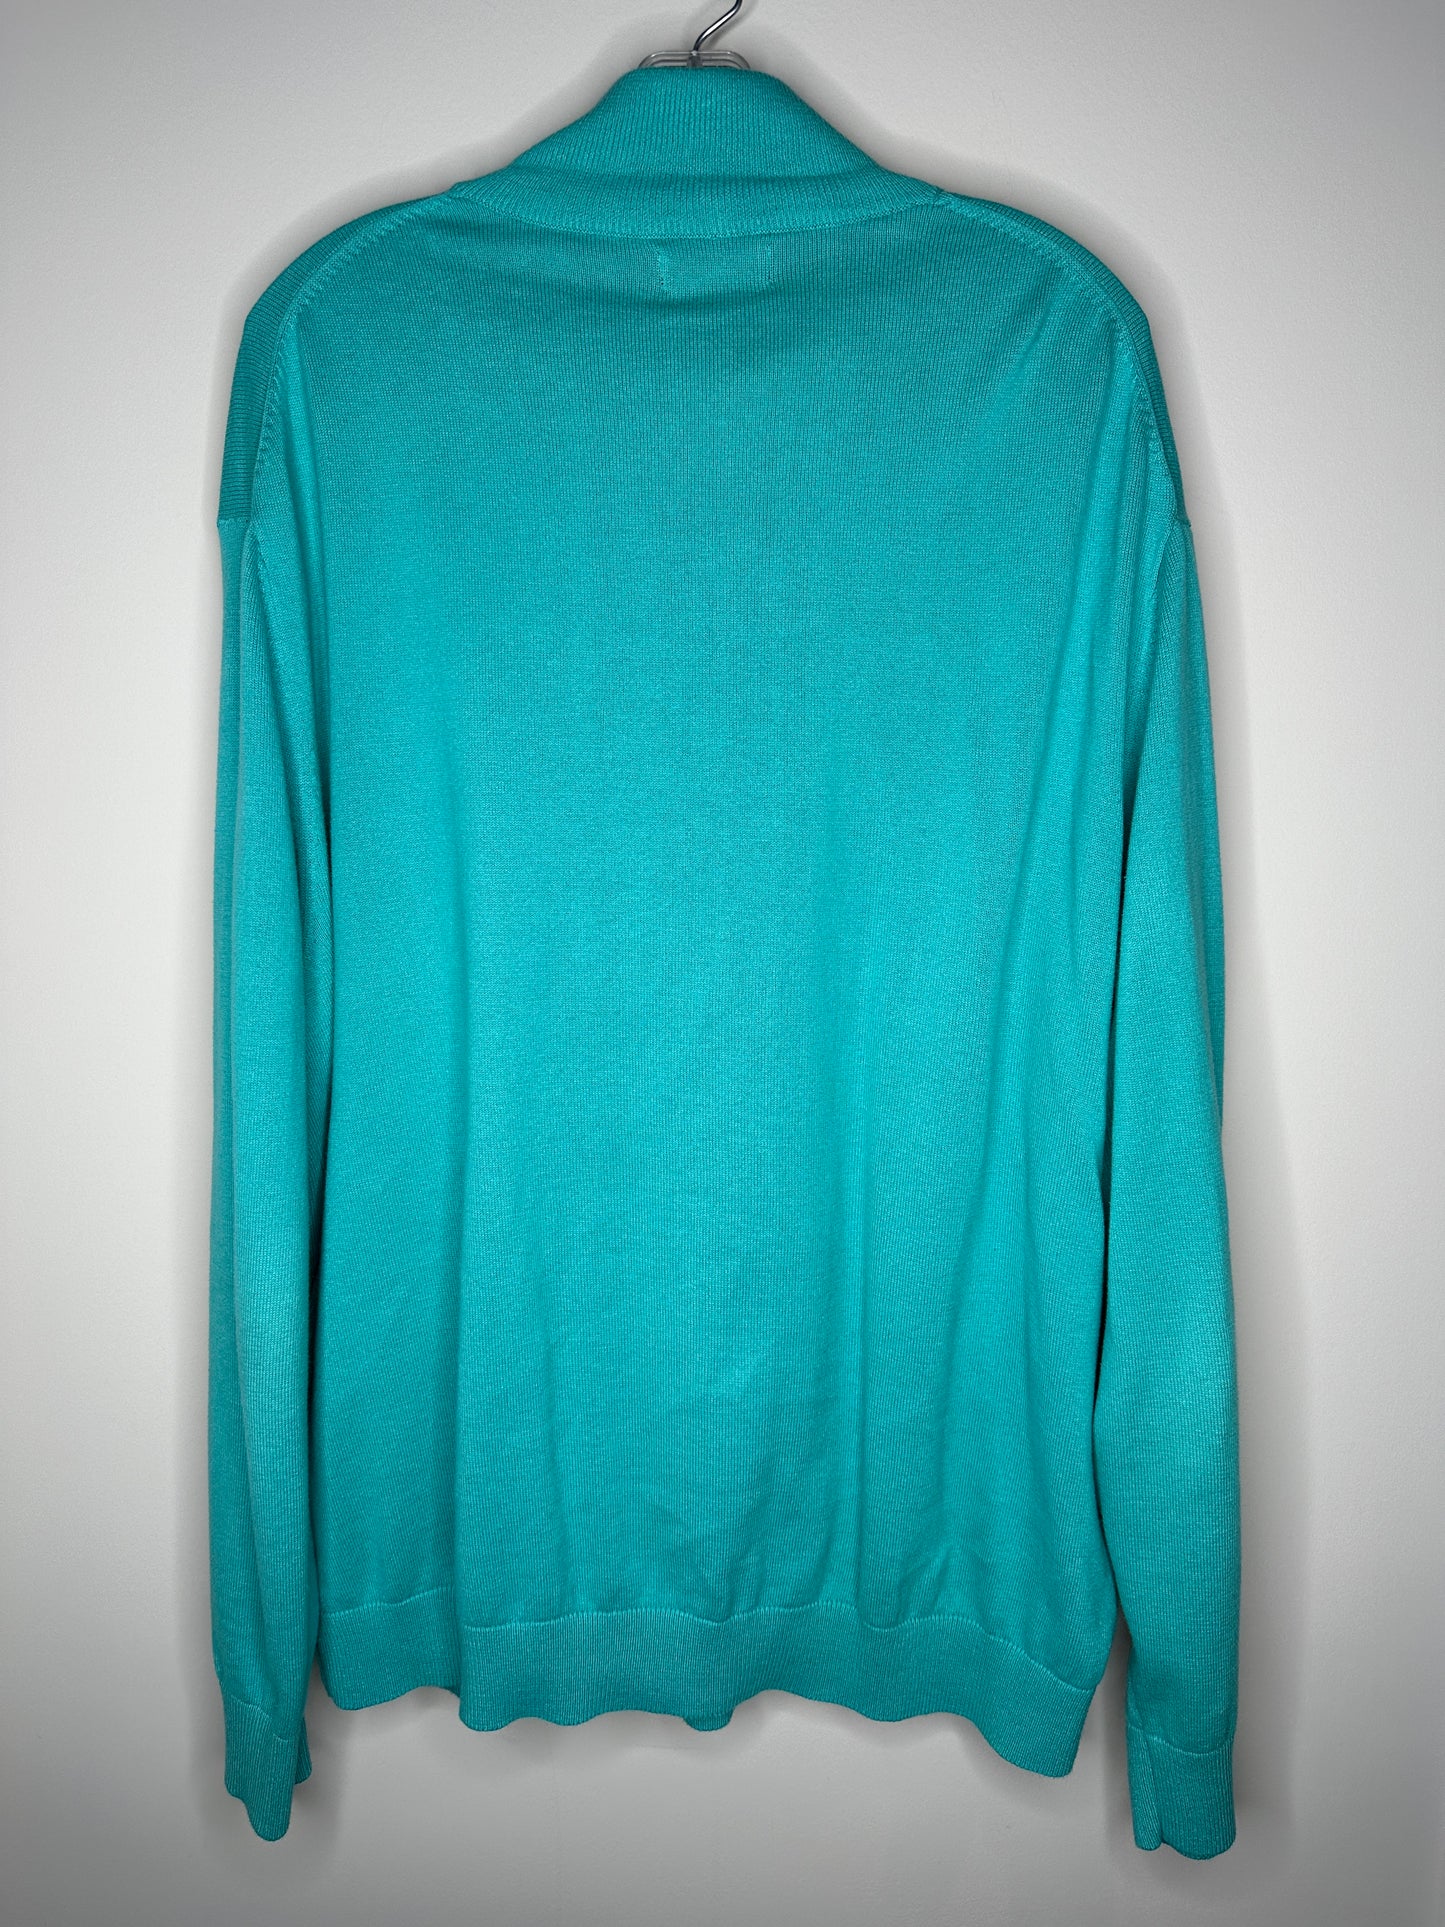 Nautica Men's Size XXL Teal Green Long Sleeve 1/4 Zip Sweater, EUC